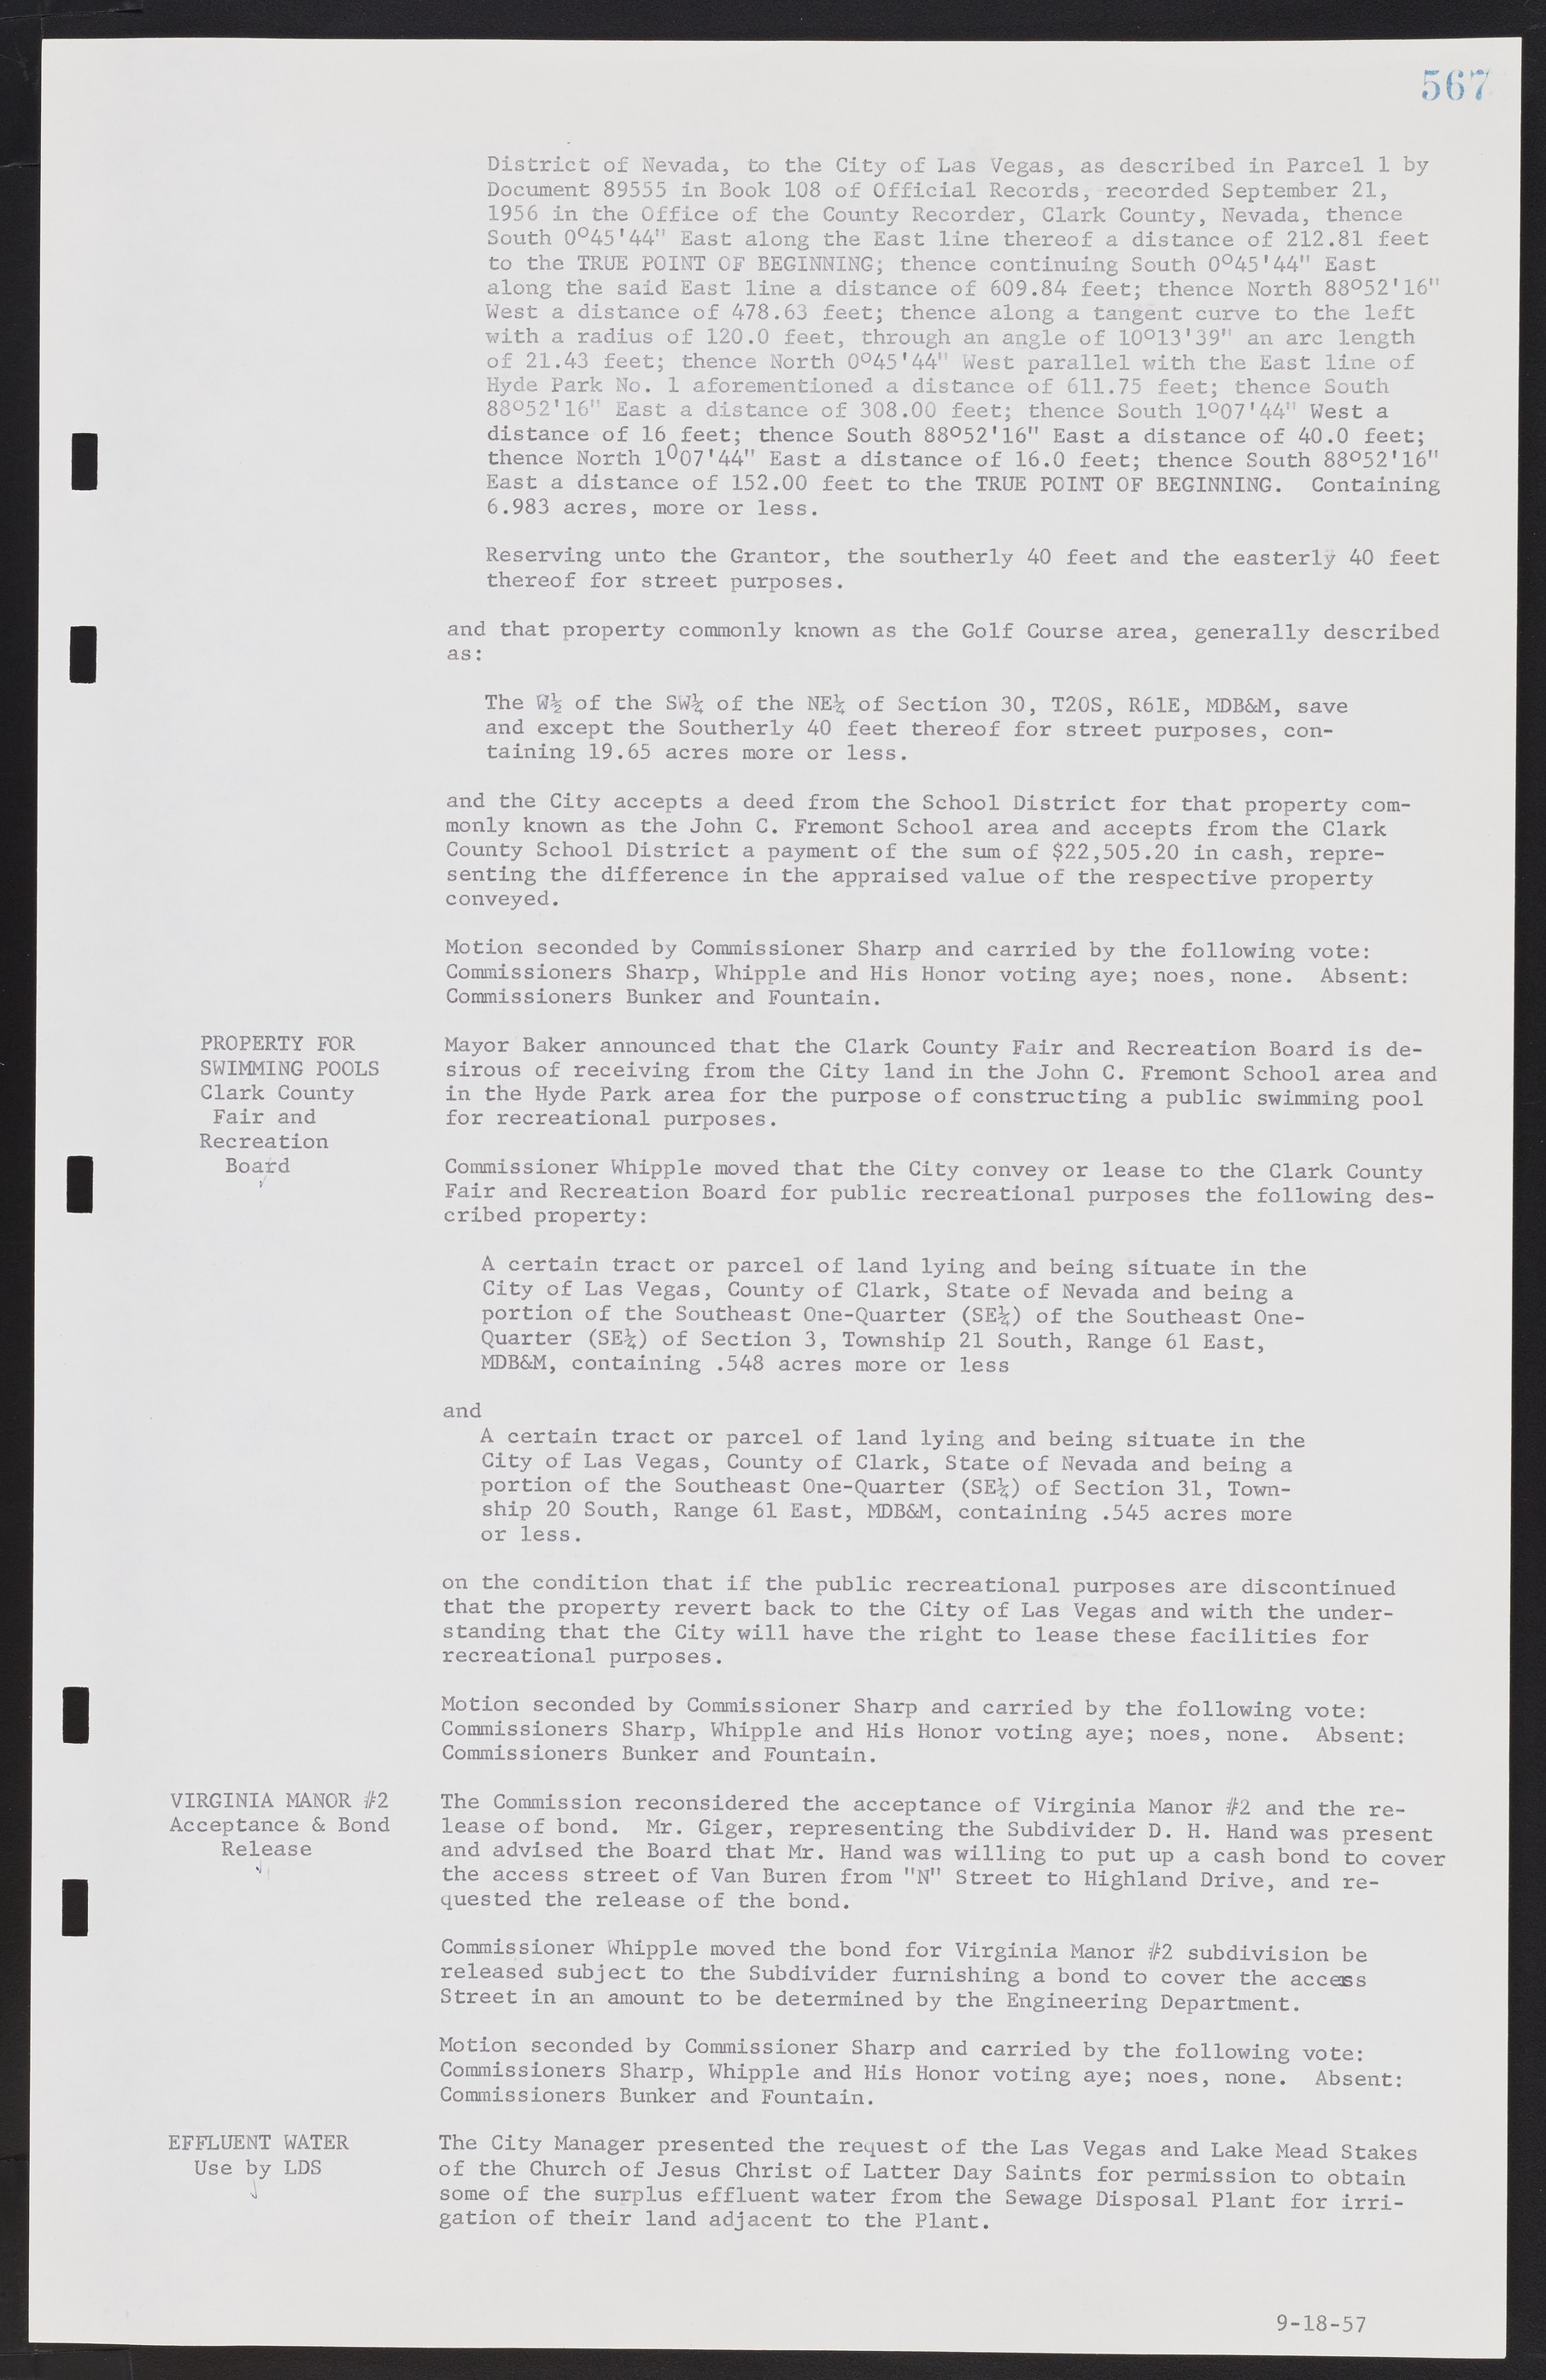 Las Vegas City Commission Minutes, September 21, 1955 to November 20, 1957, lvc000010-587